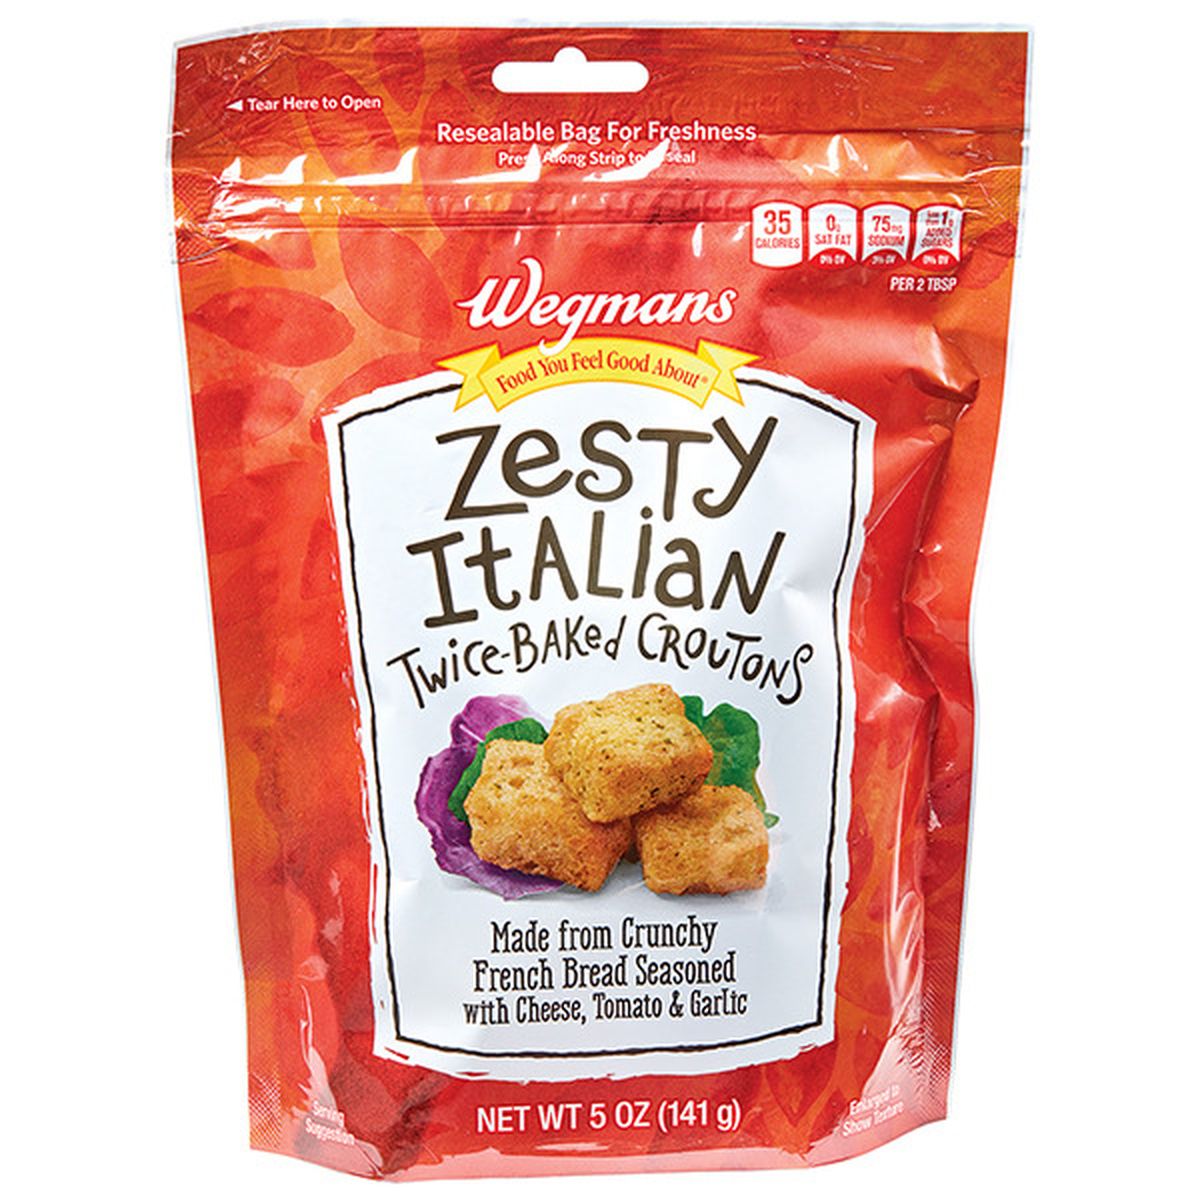 Calories in Wegmans Zesty Italian Twice-Baked Croutons